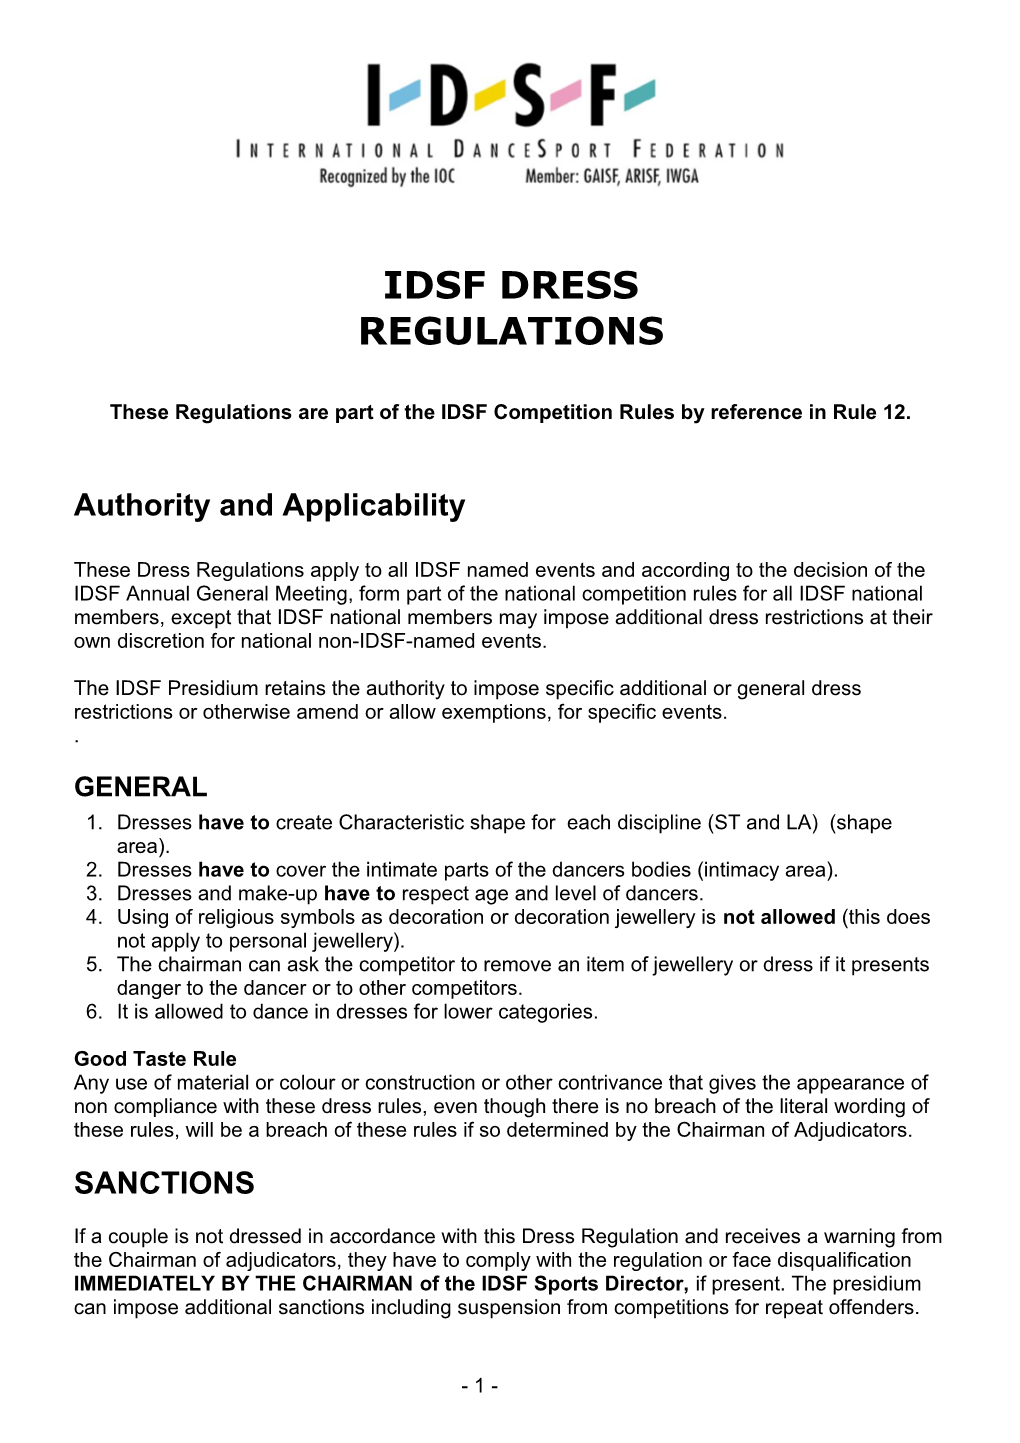 IDSF Dress Regulation - V.2.0